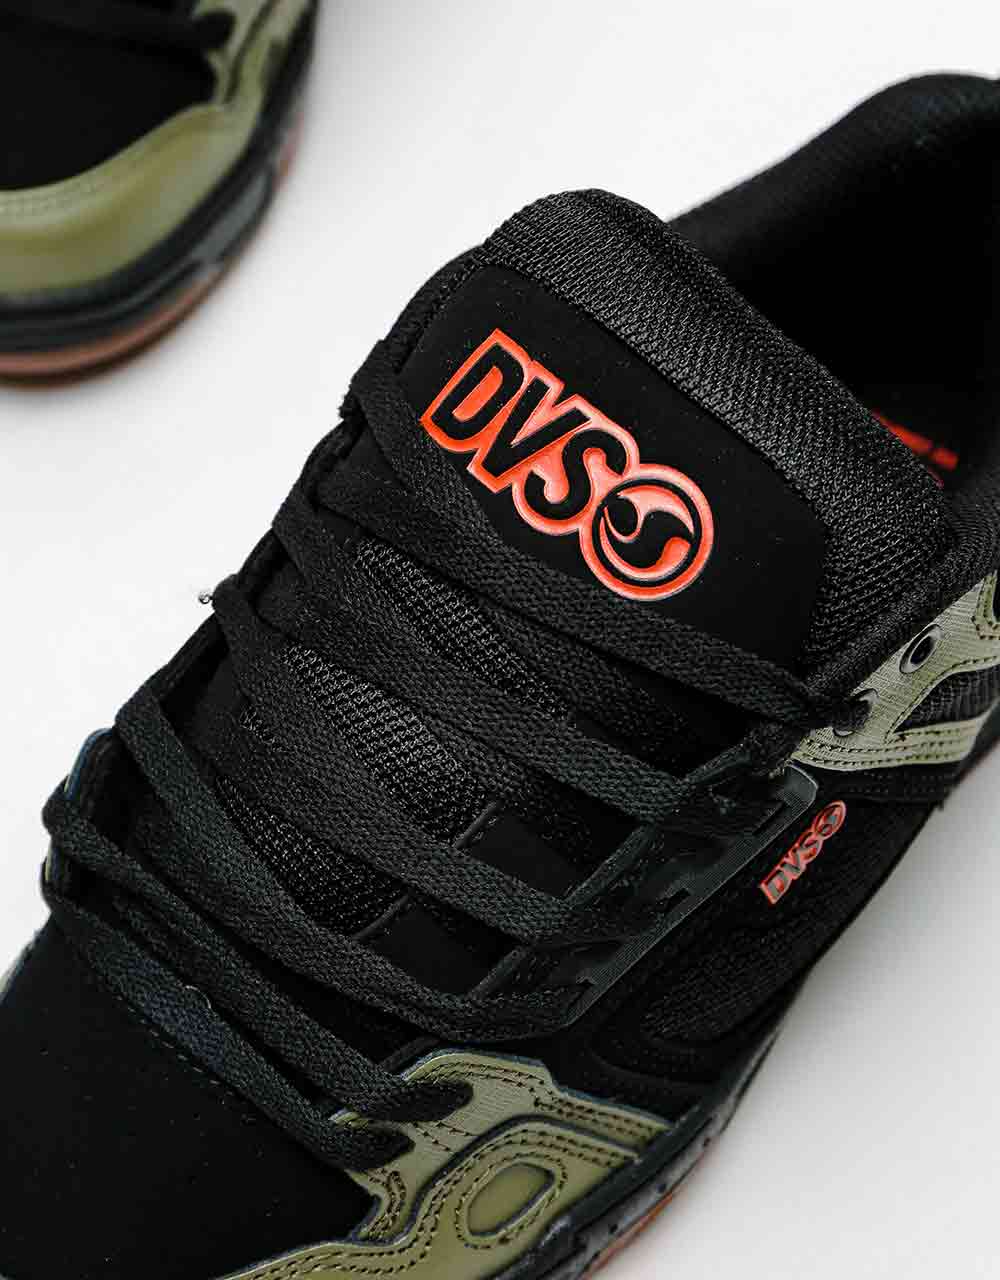 DVS Comanche Skate Shoes - Black/Olive/Orange Nubuck